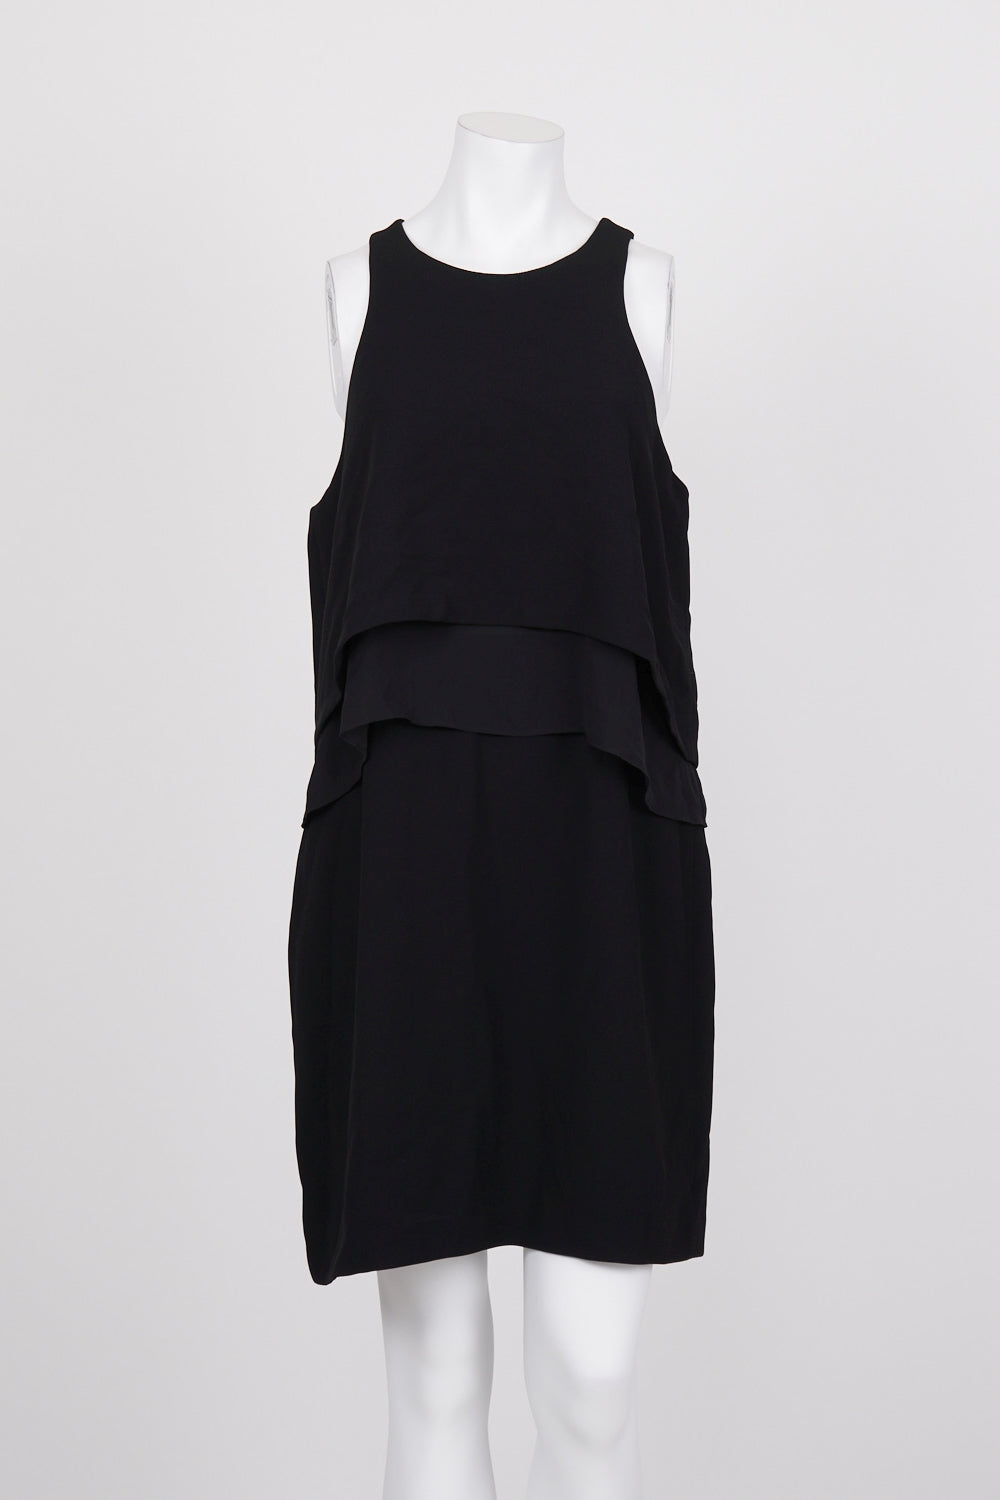 SABA Black Mini Dress 12 